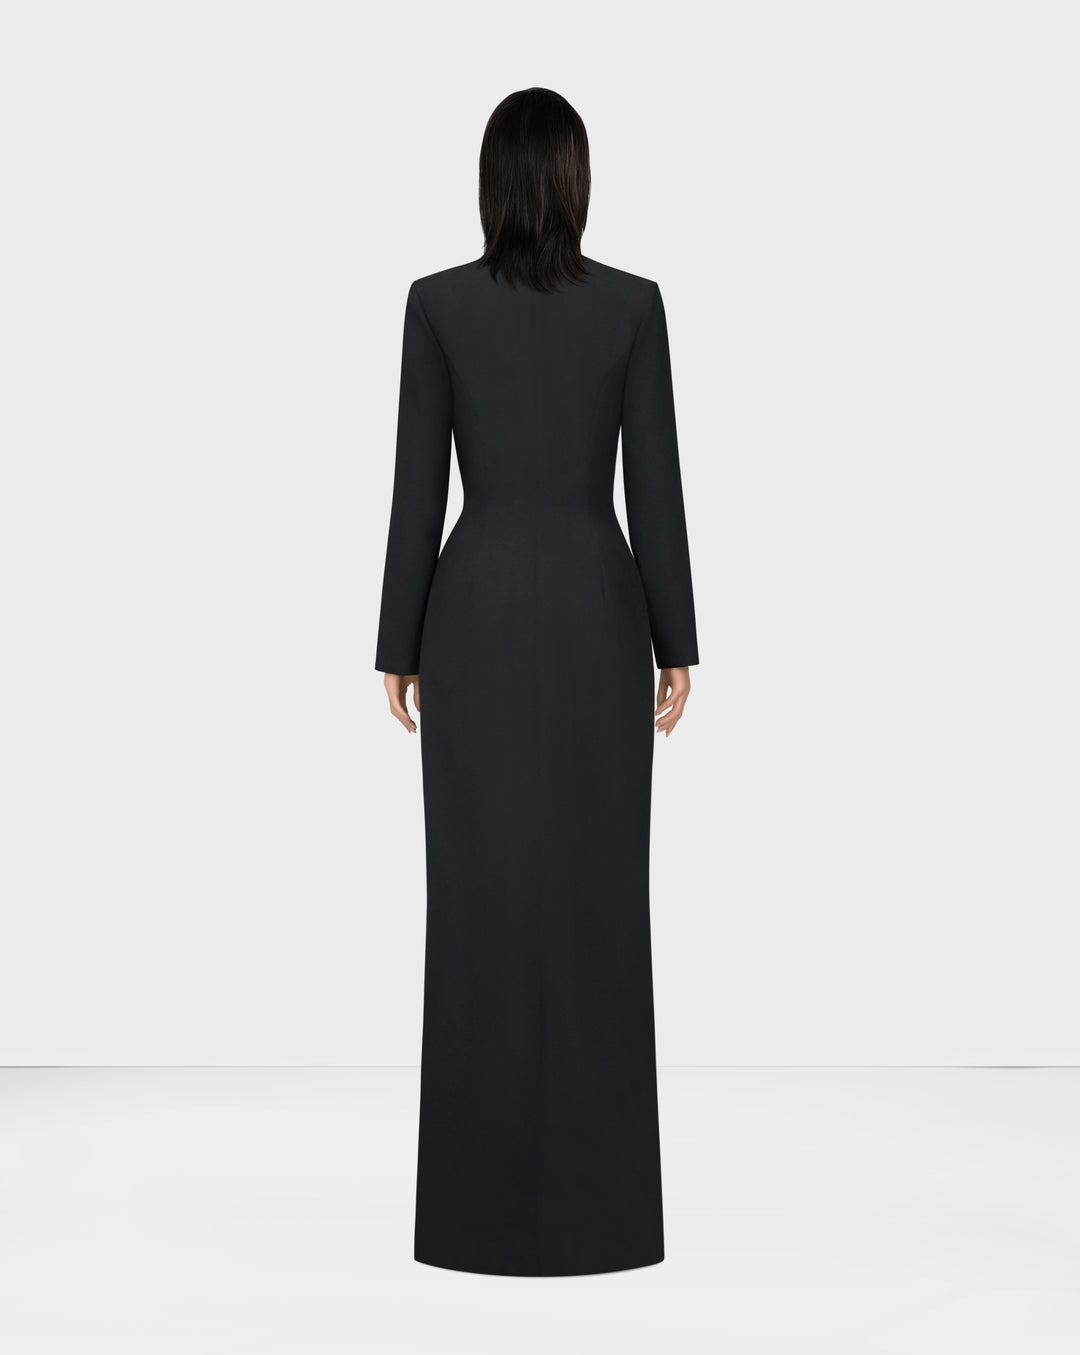 Sequined blazer black dress